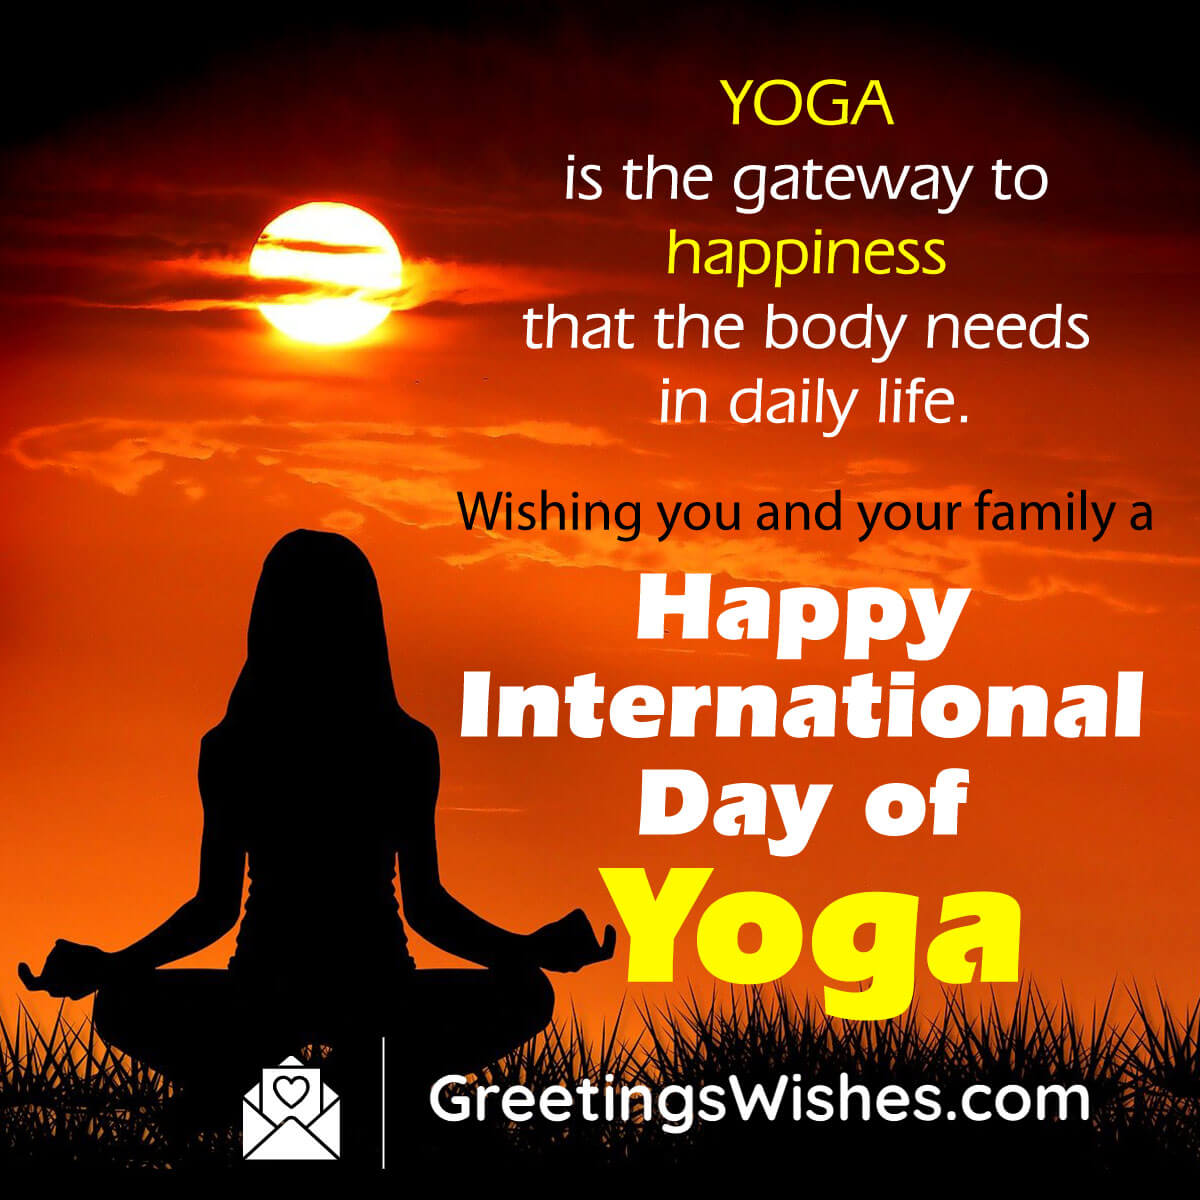 International Yoga Day Greetings